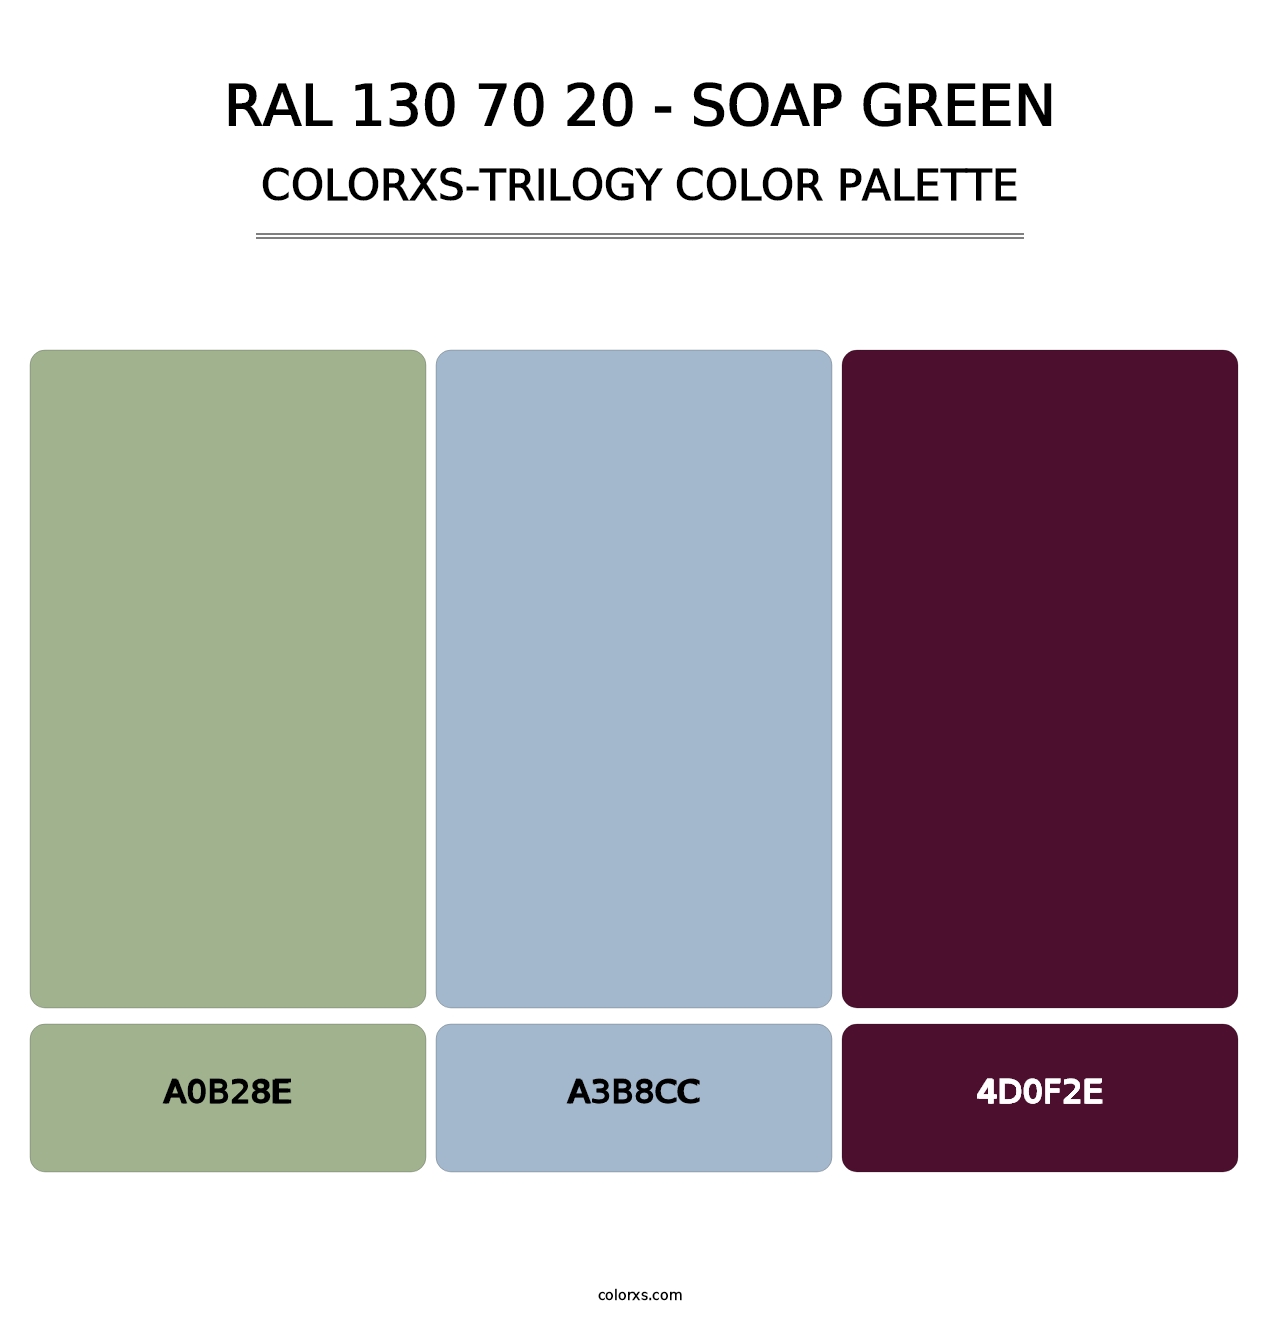 RAL 130 70 20 - Soap Green - Colorxs Trilogy Palette